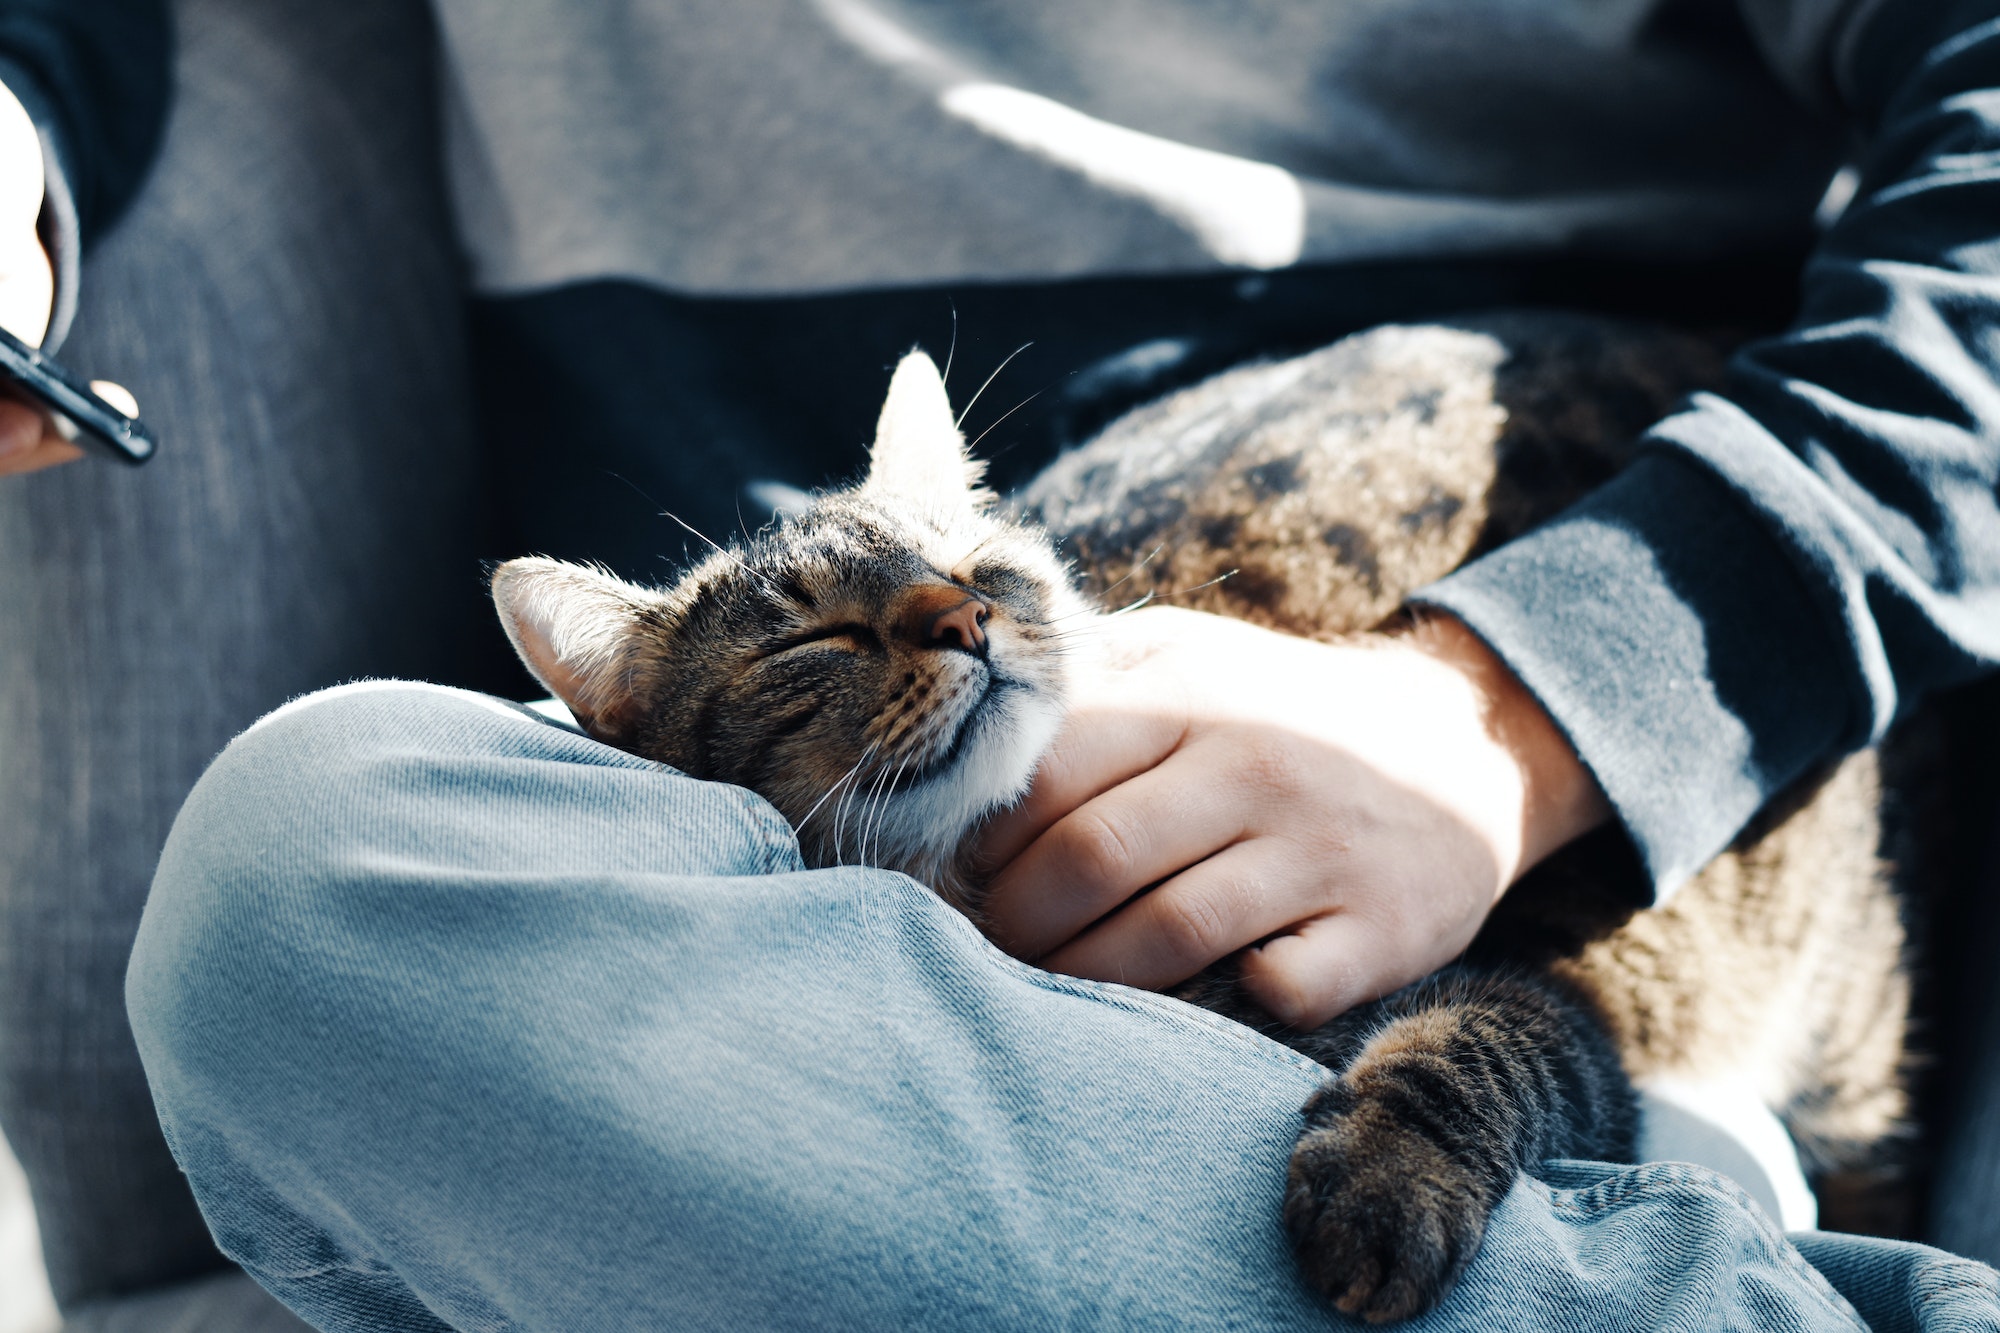 Sleeping tabby cat on man’s lap